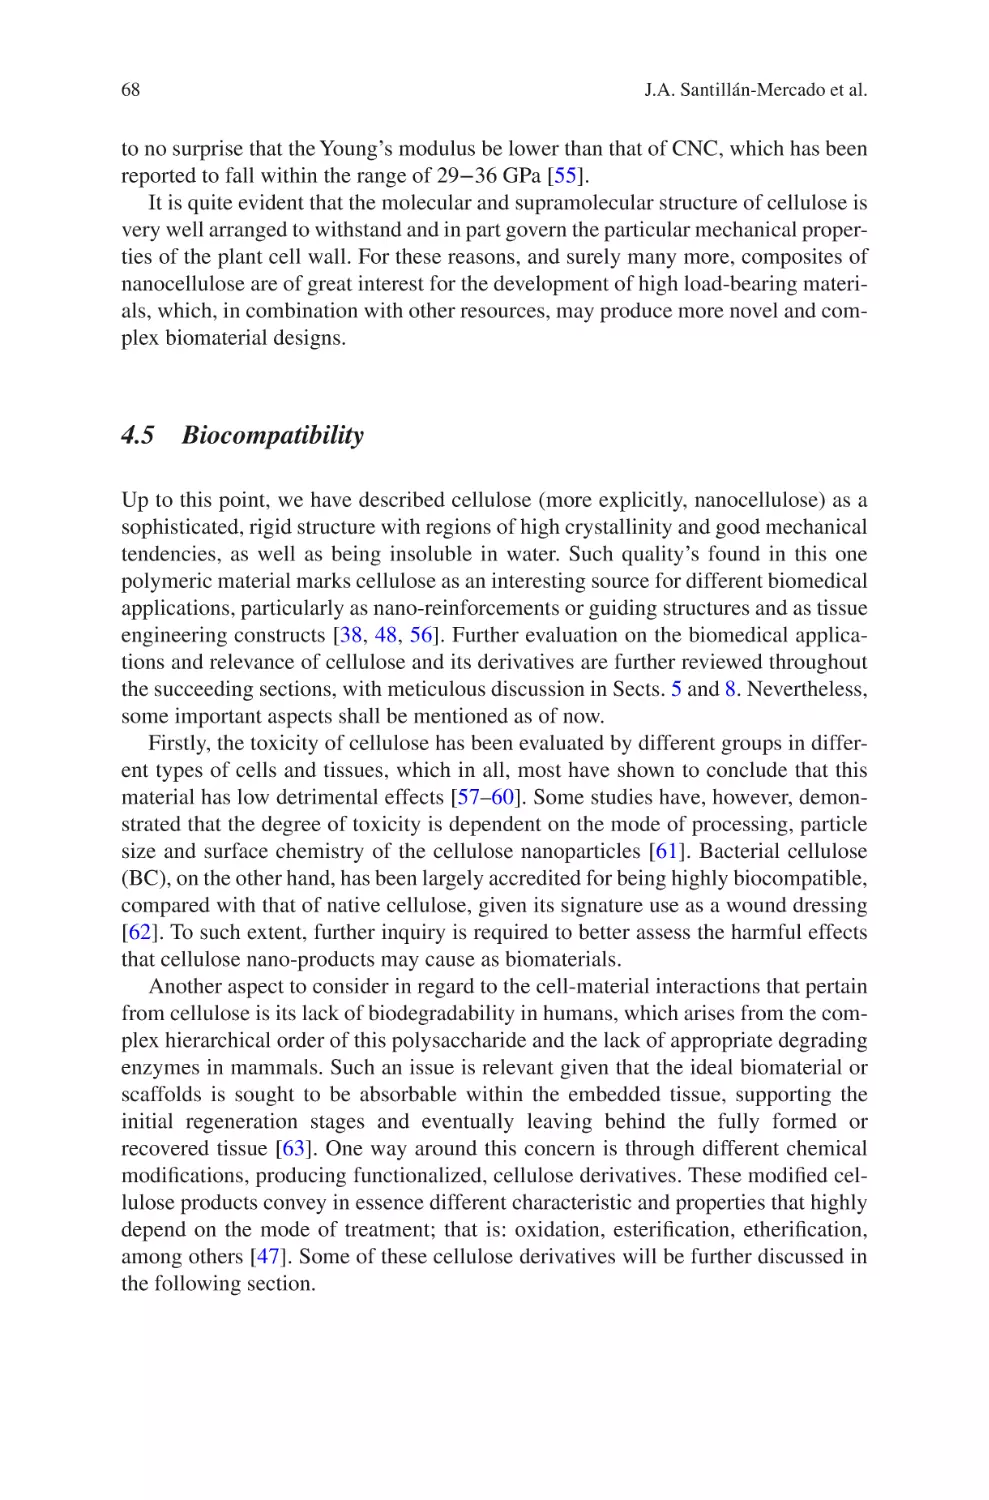 4.5 Biocompatibility